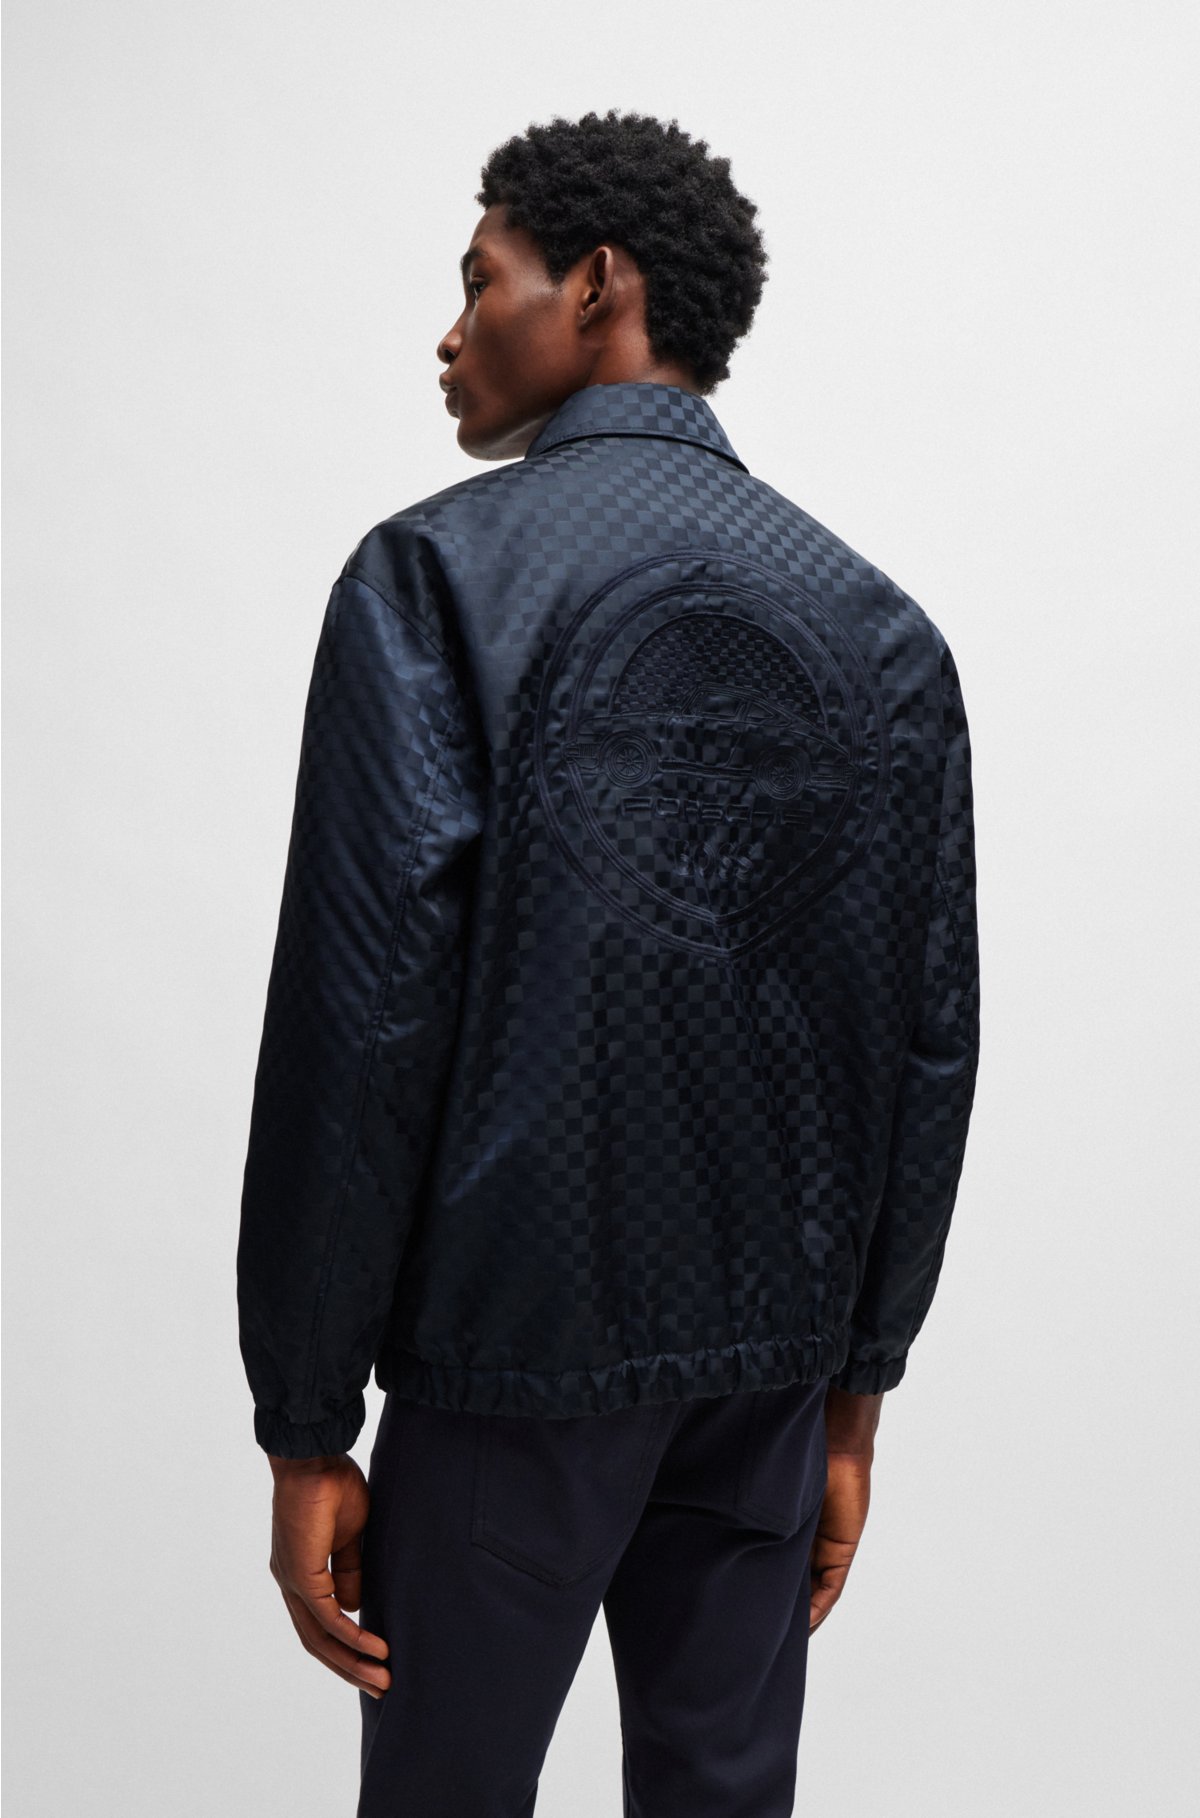 Porsche x BOSS jacket in checkerboard jacquard with collaborative branding